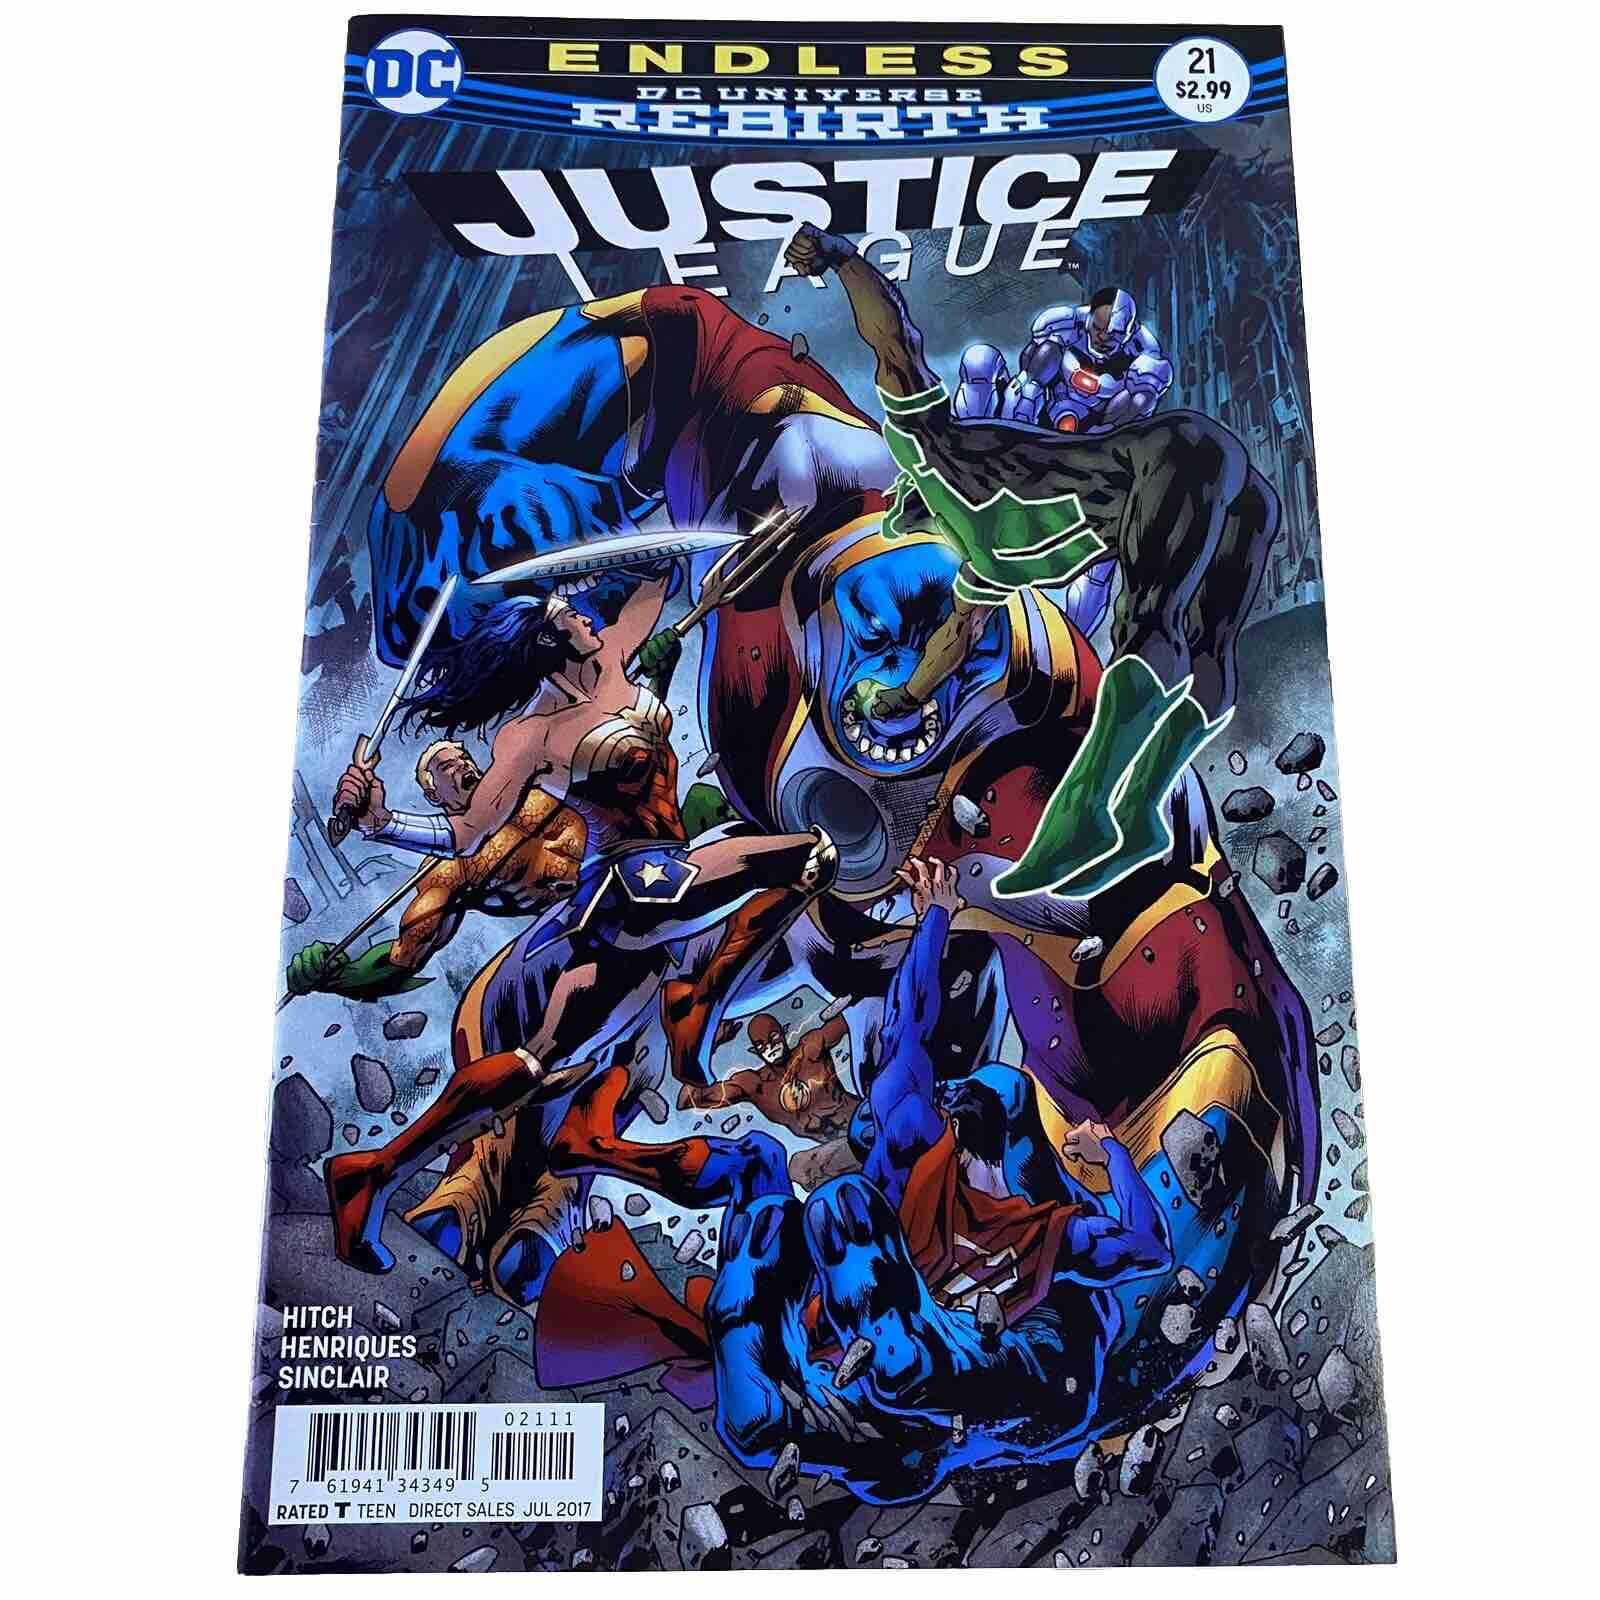 JUSTICE LEAGUE #21 DC Universe Rebirth Endless DC Comics July 2017